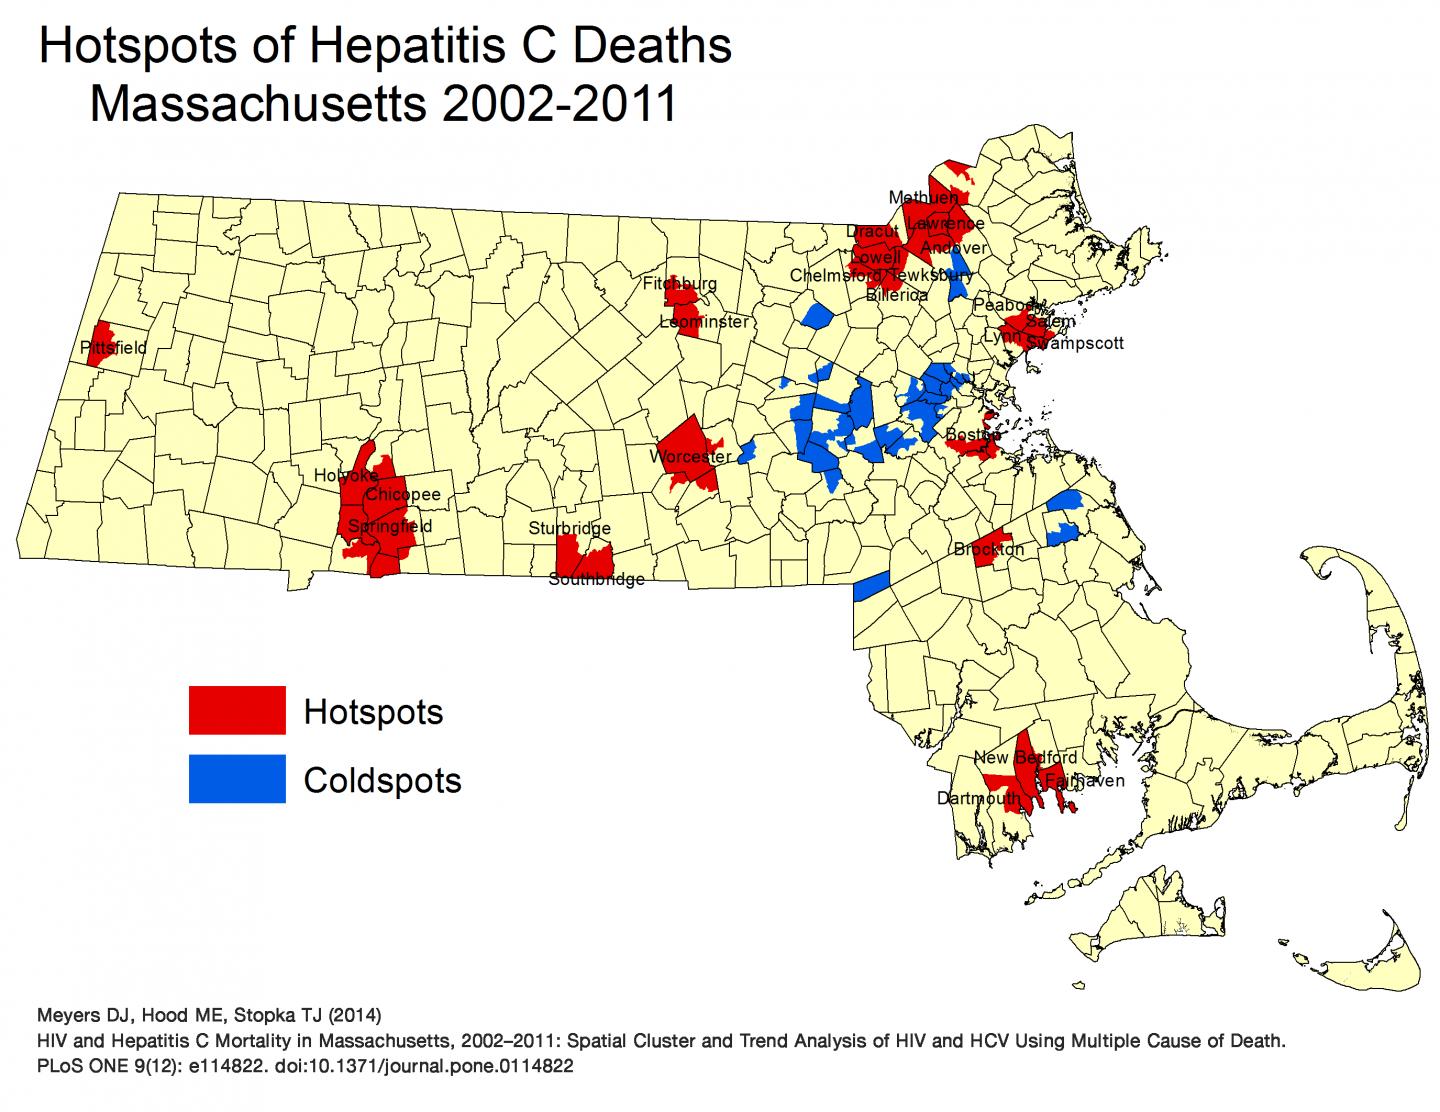 Hotspots of Hepatitis C Deaths: Massachusetts 2002-2011